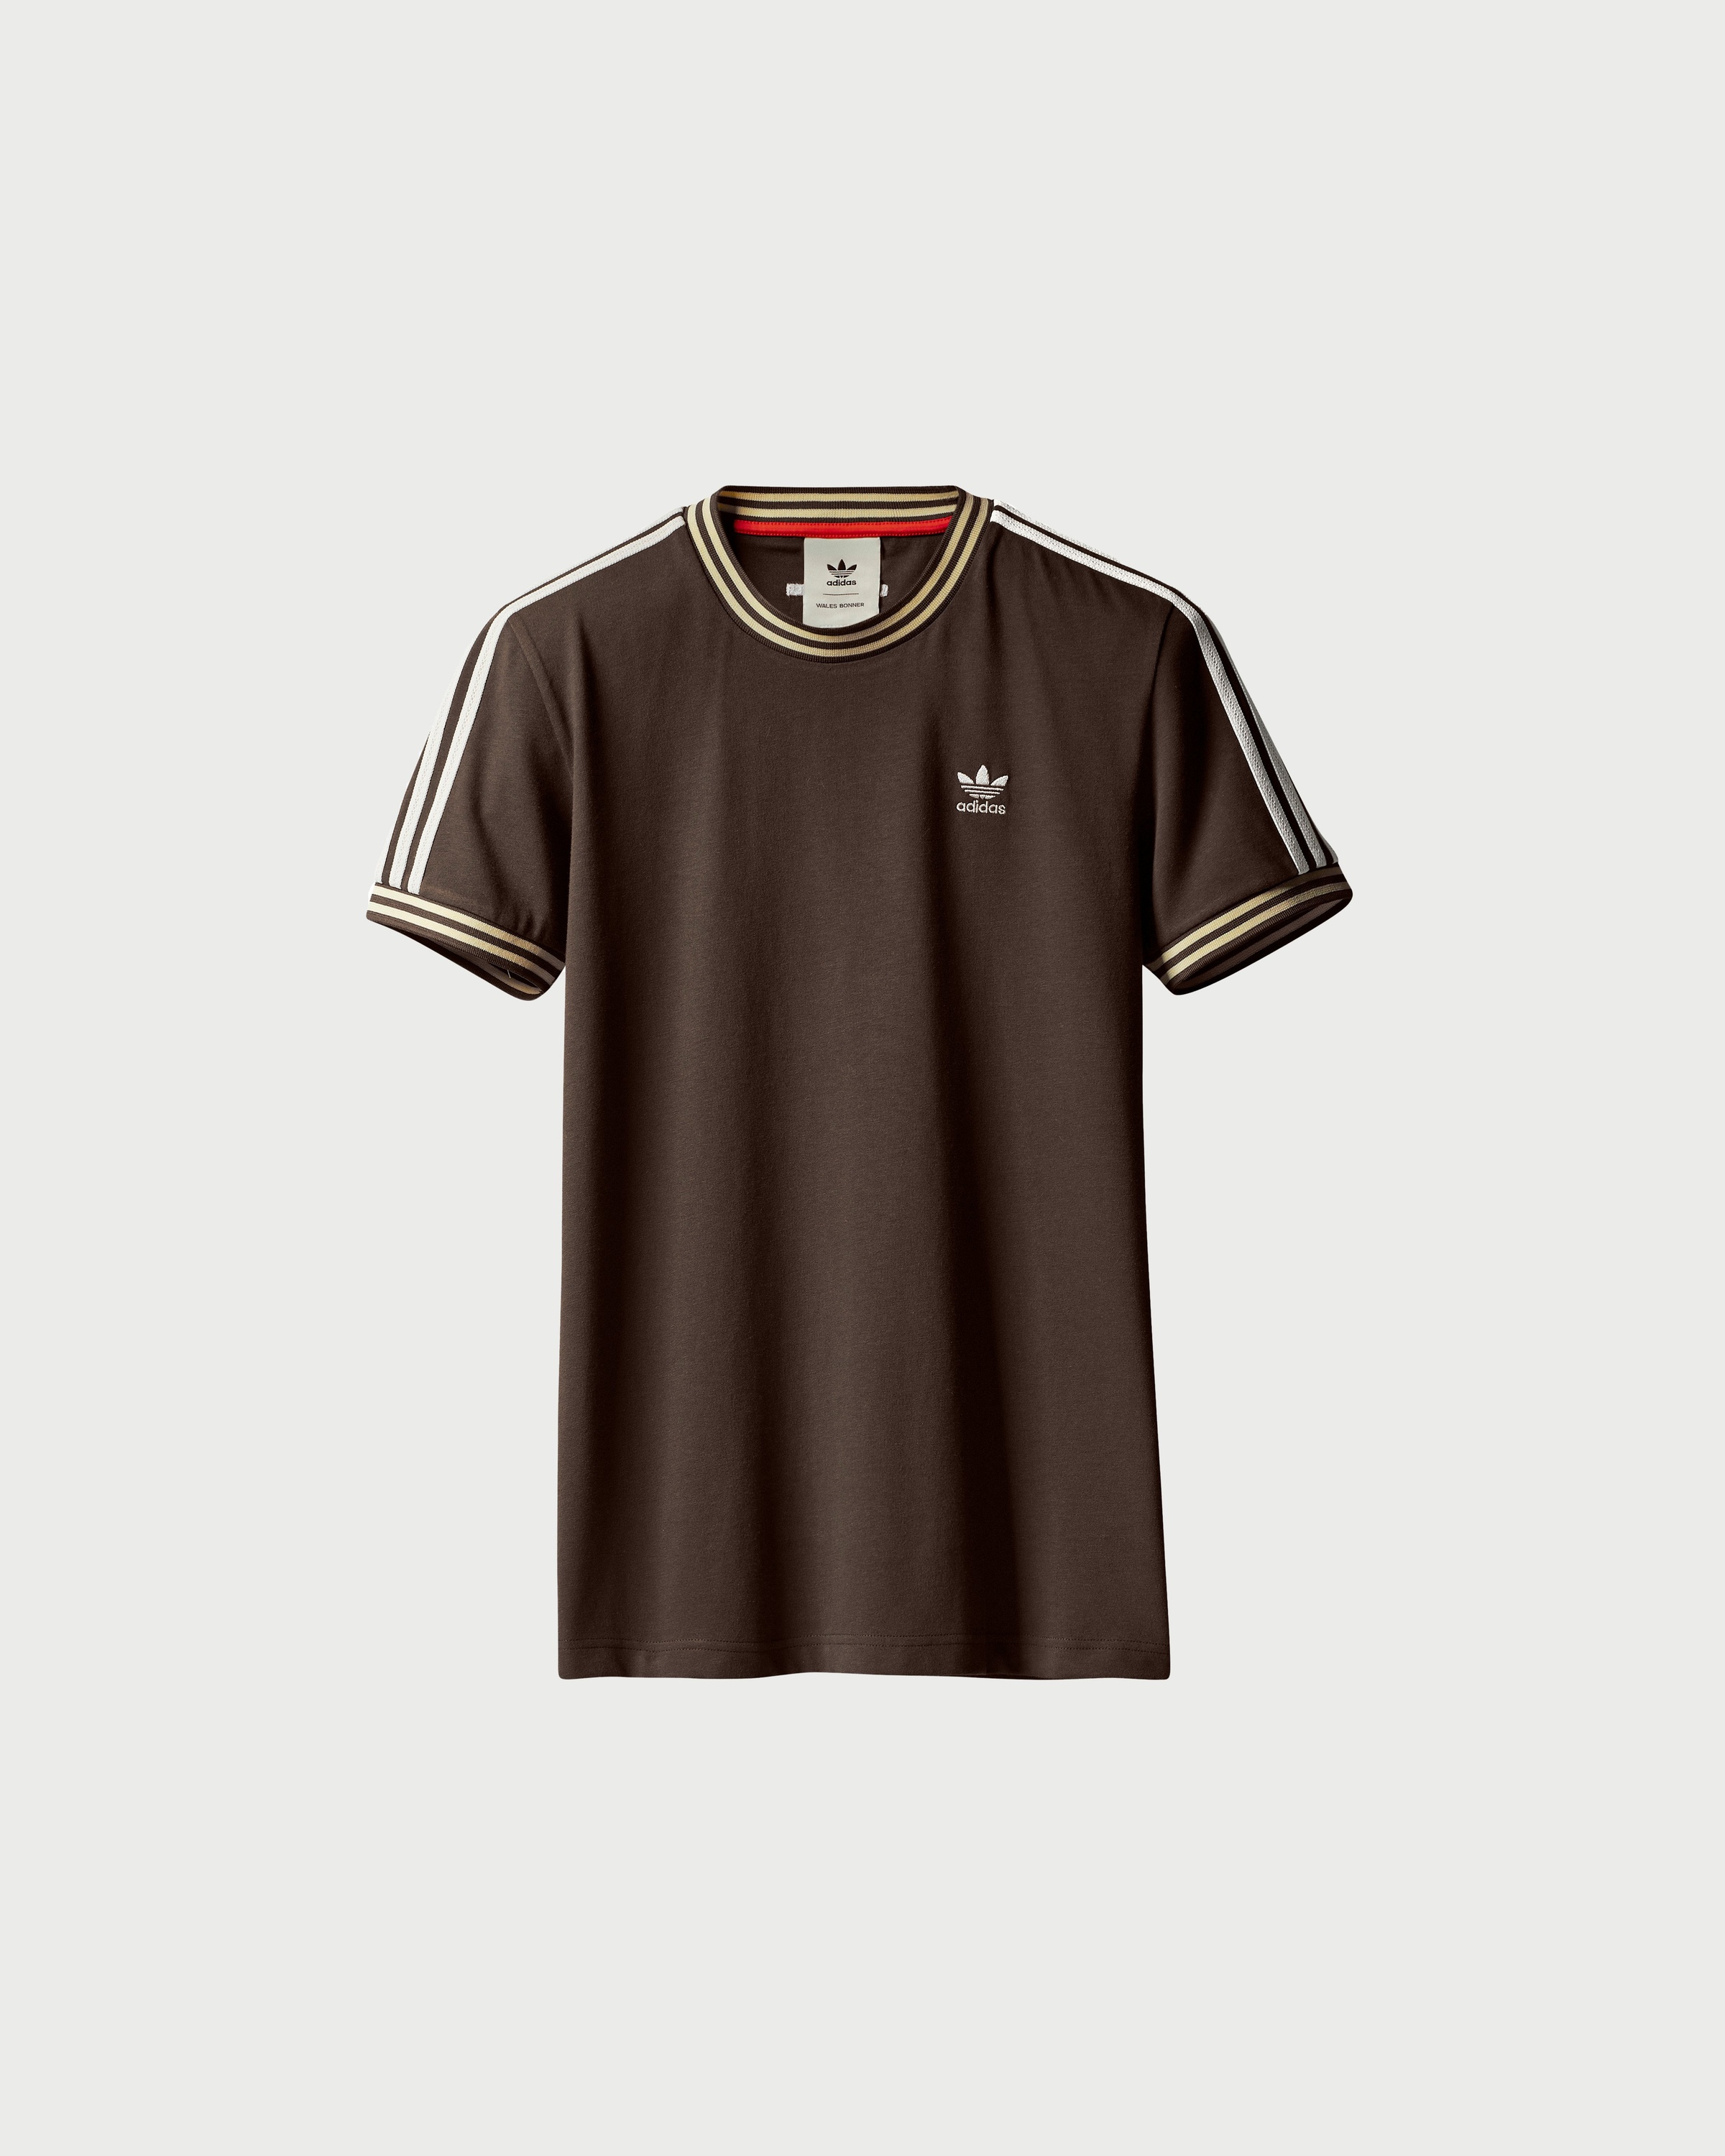 Adidas x Wales Bonner – Tee Brown - T-Shirts - Brown - Image 1